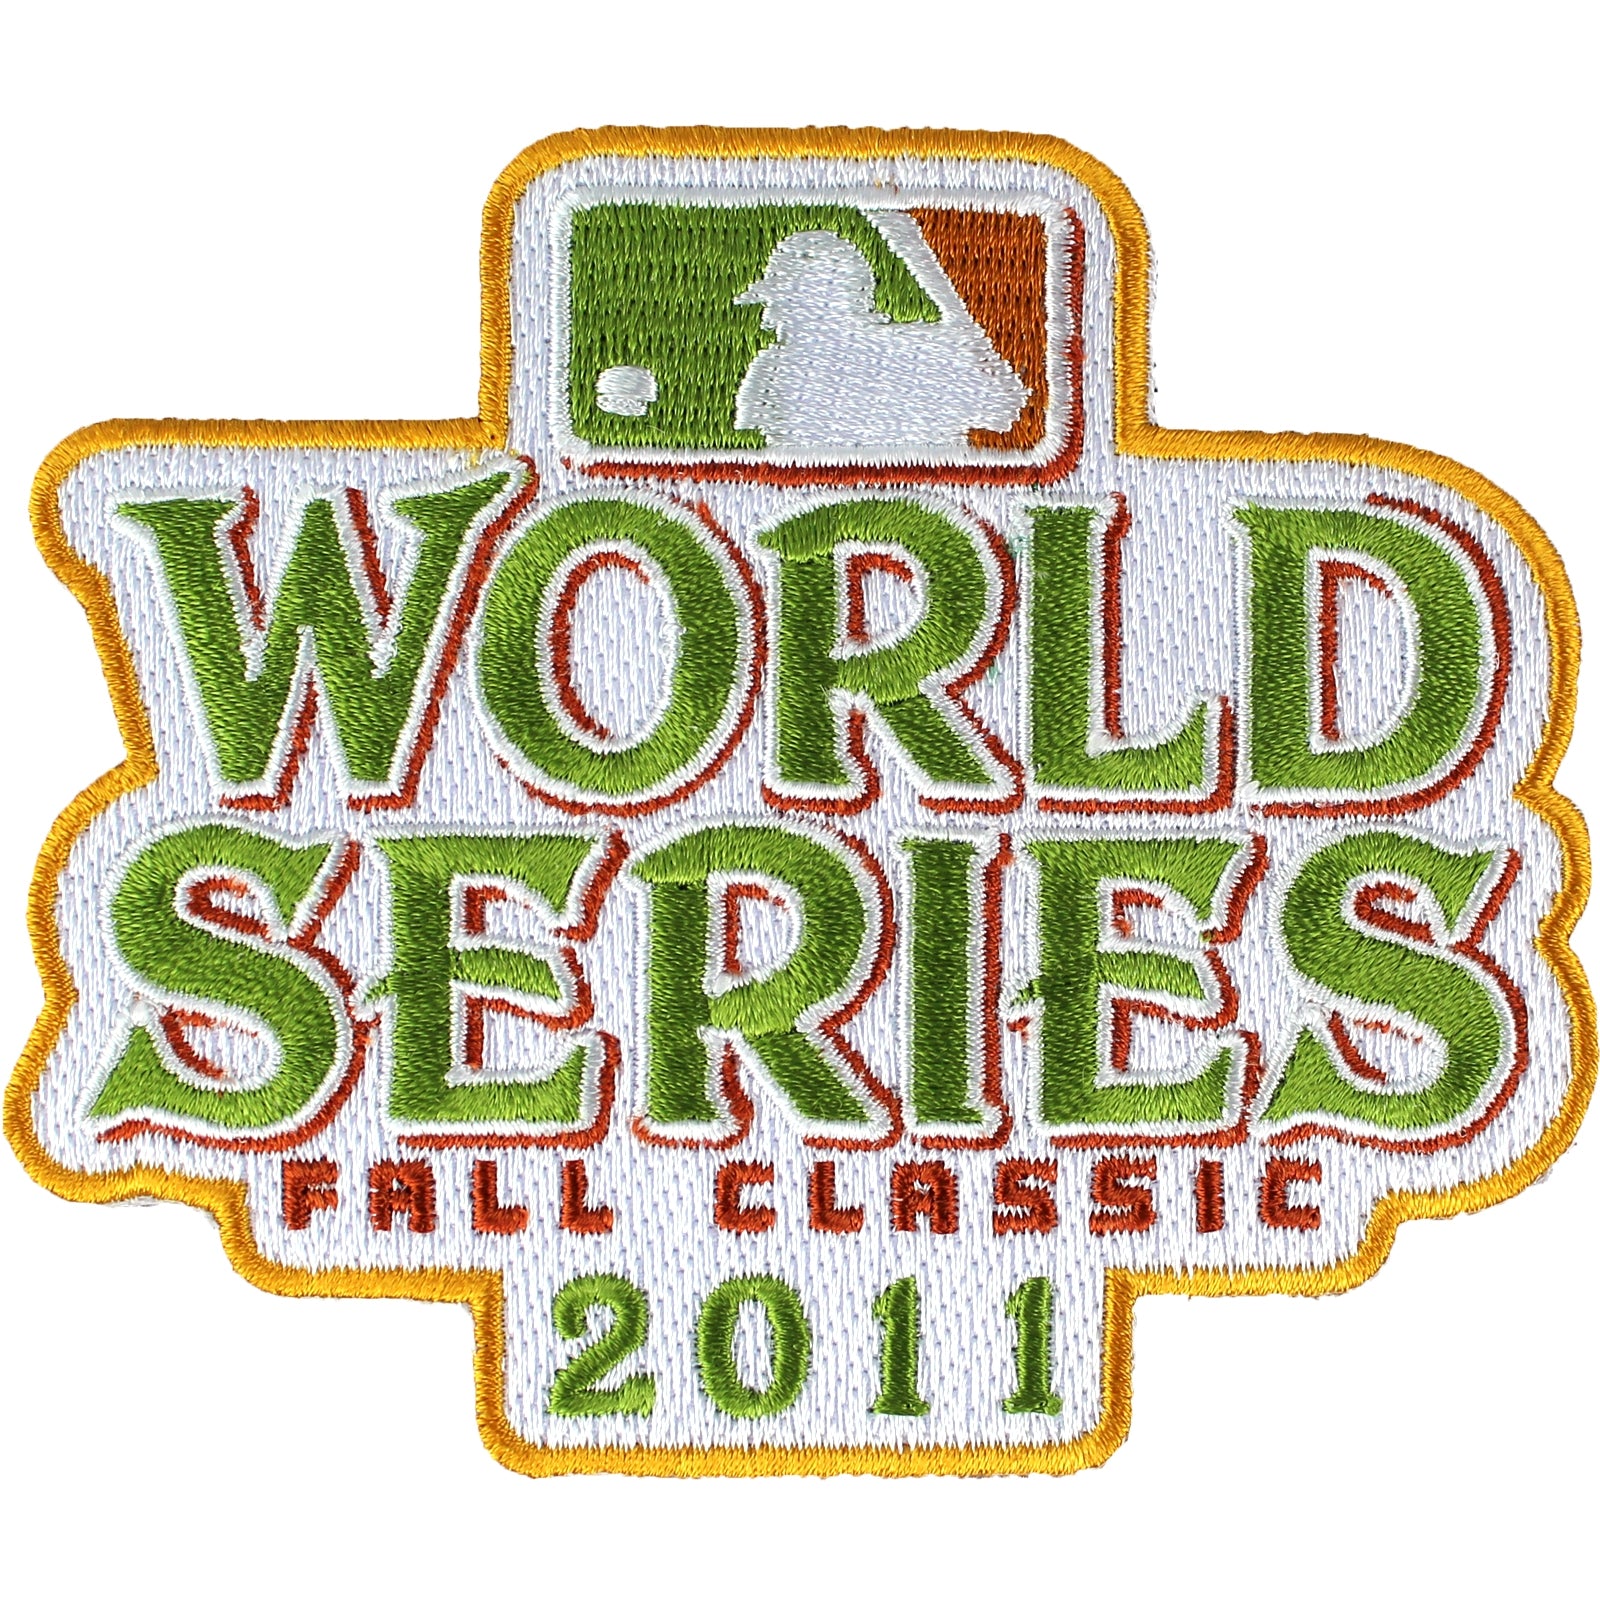 2011 MLB World Series Logo Jersey Sleeve Patch Fall Classic St. Louis Cardinals vs. Texas Rangers 